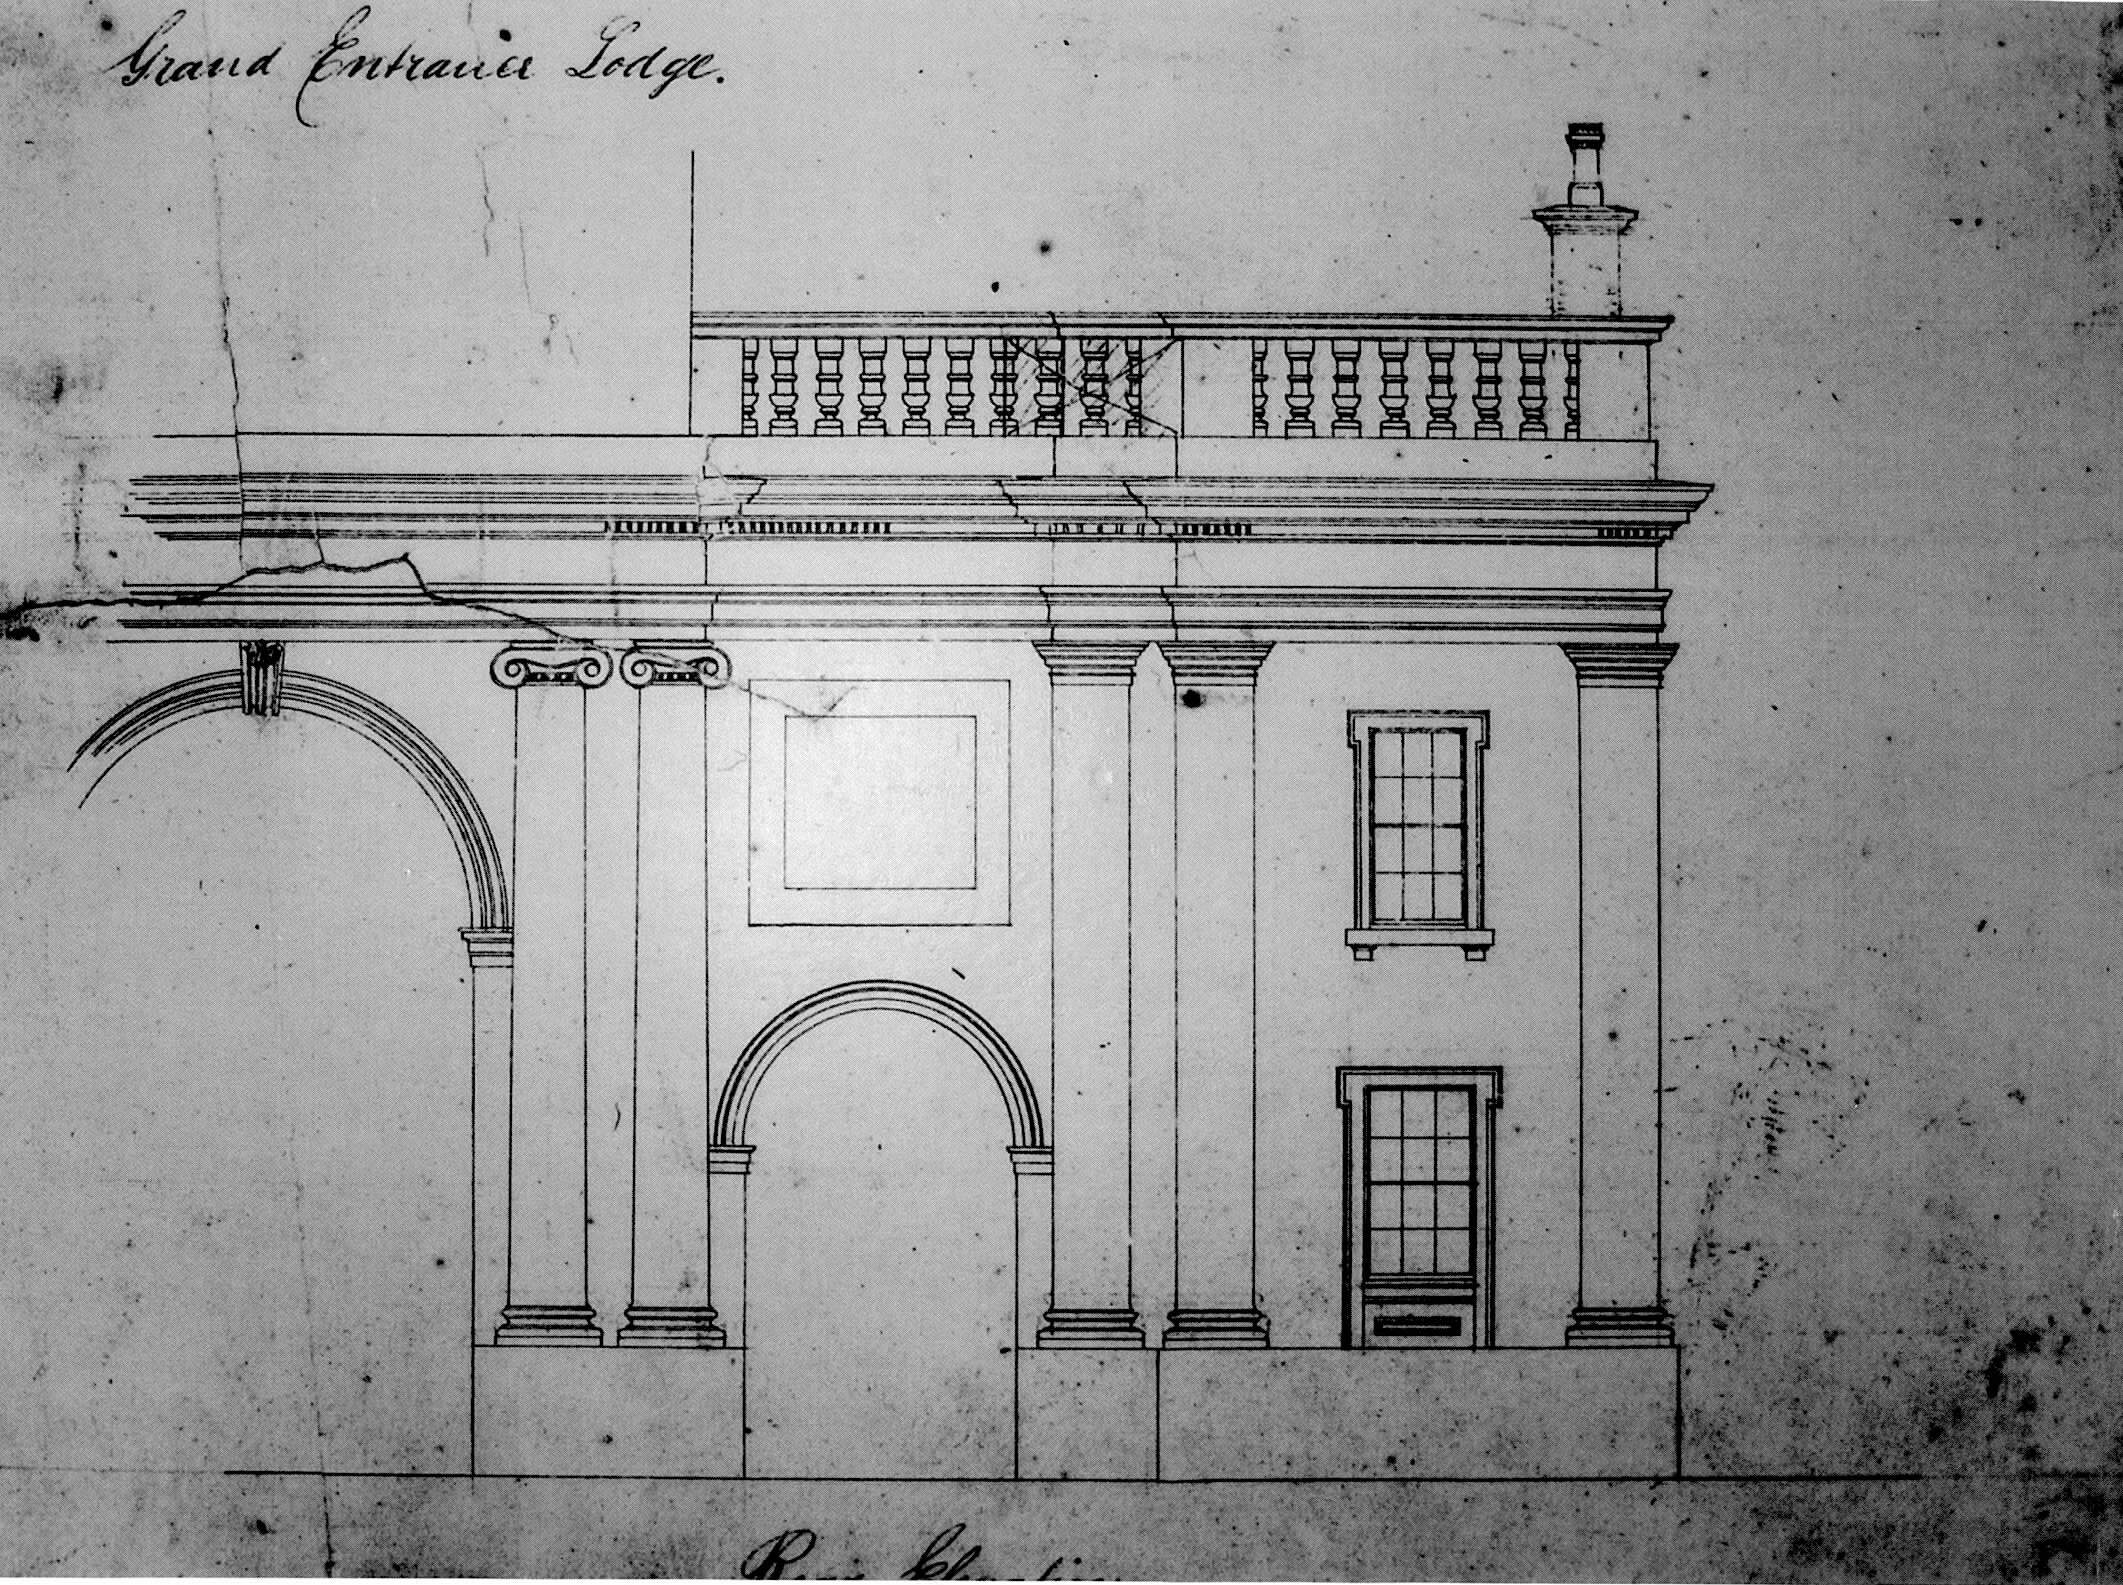 Original plan detail of Grand Entrance